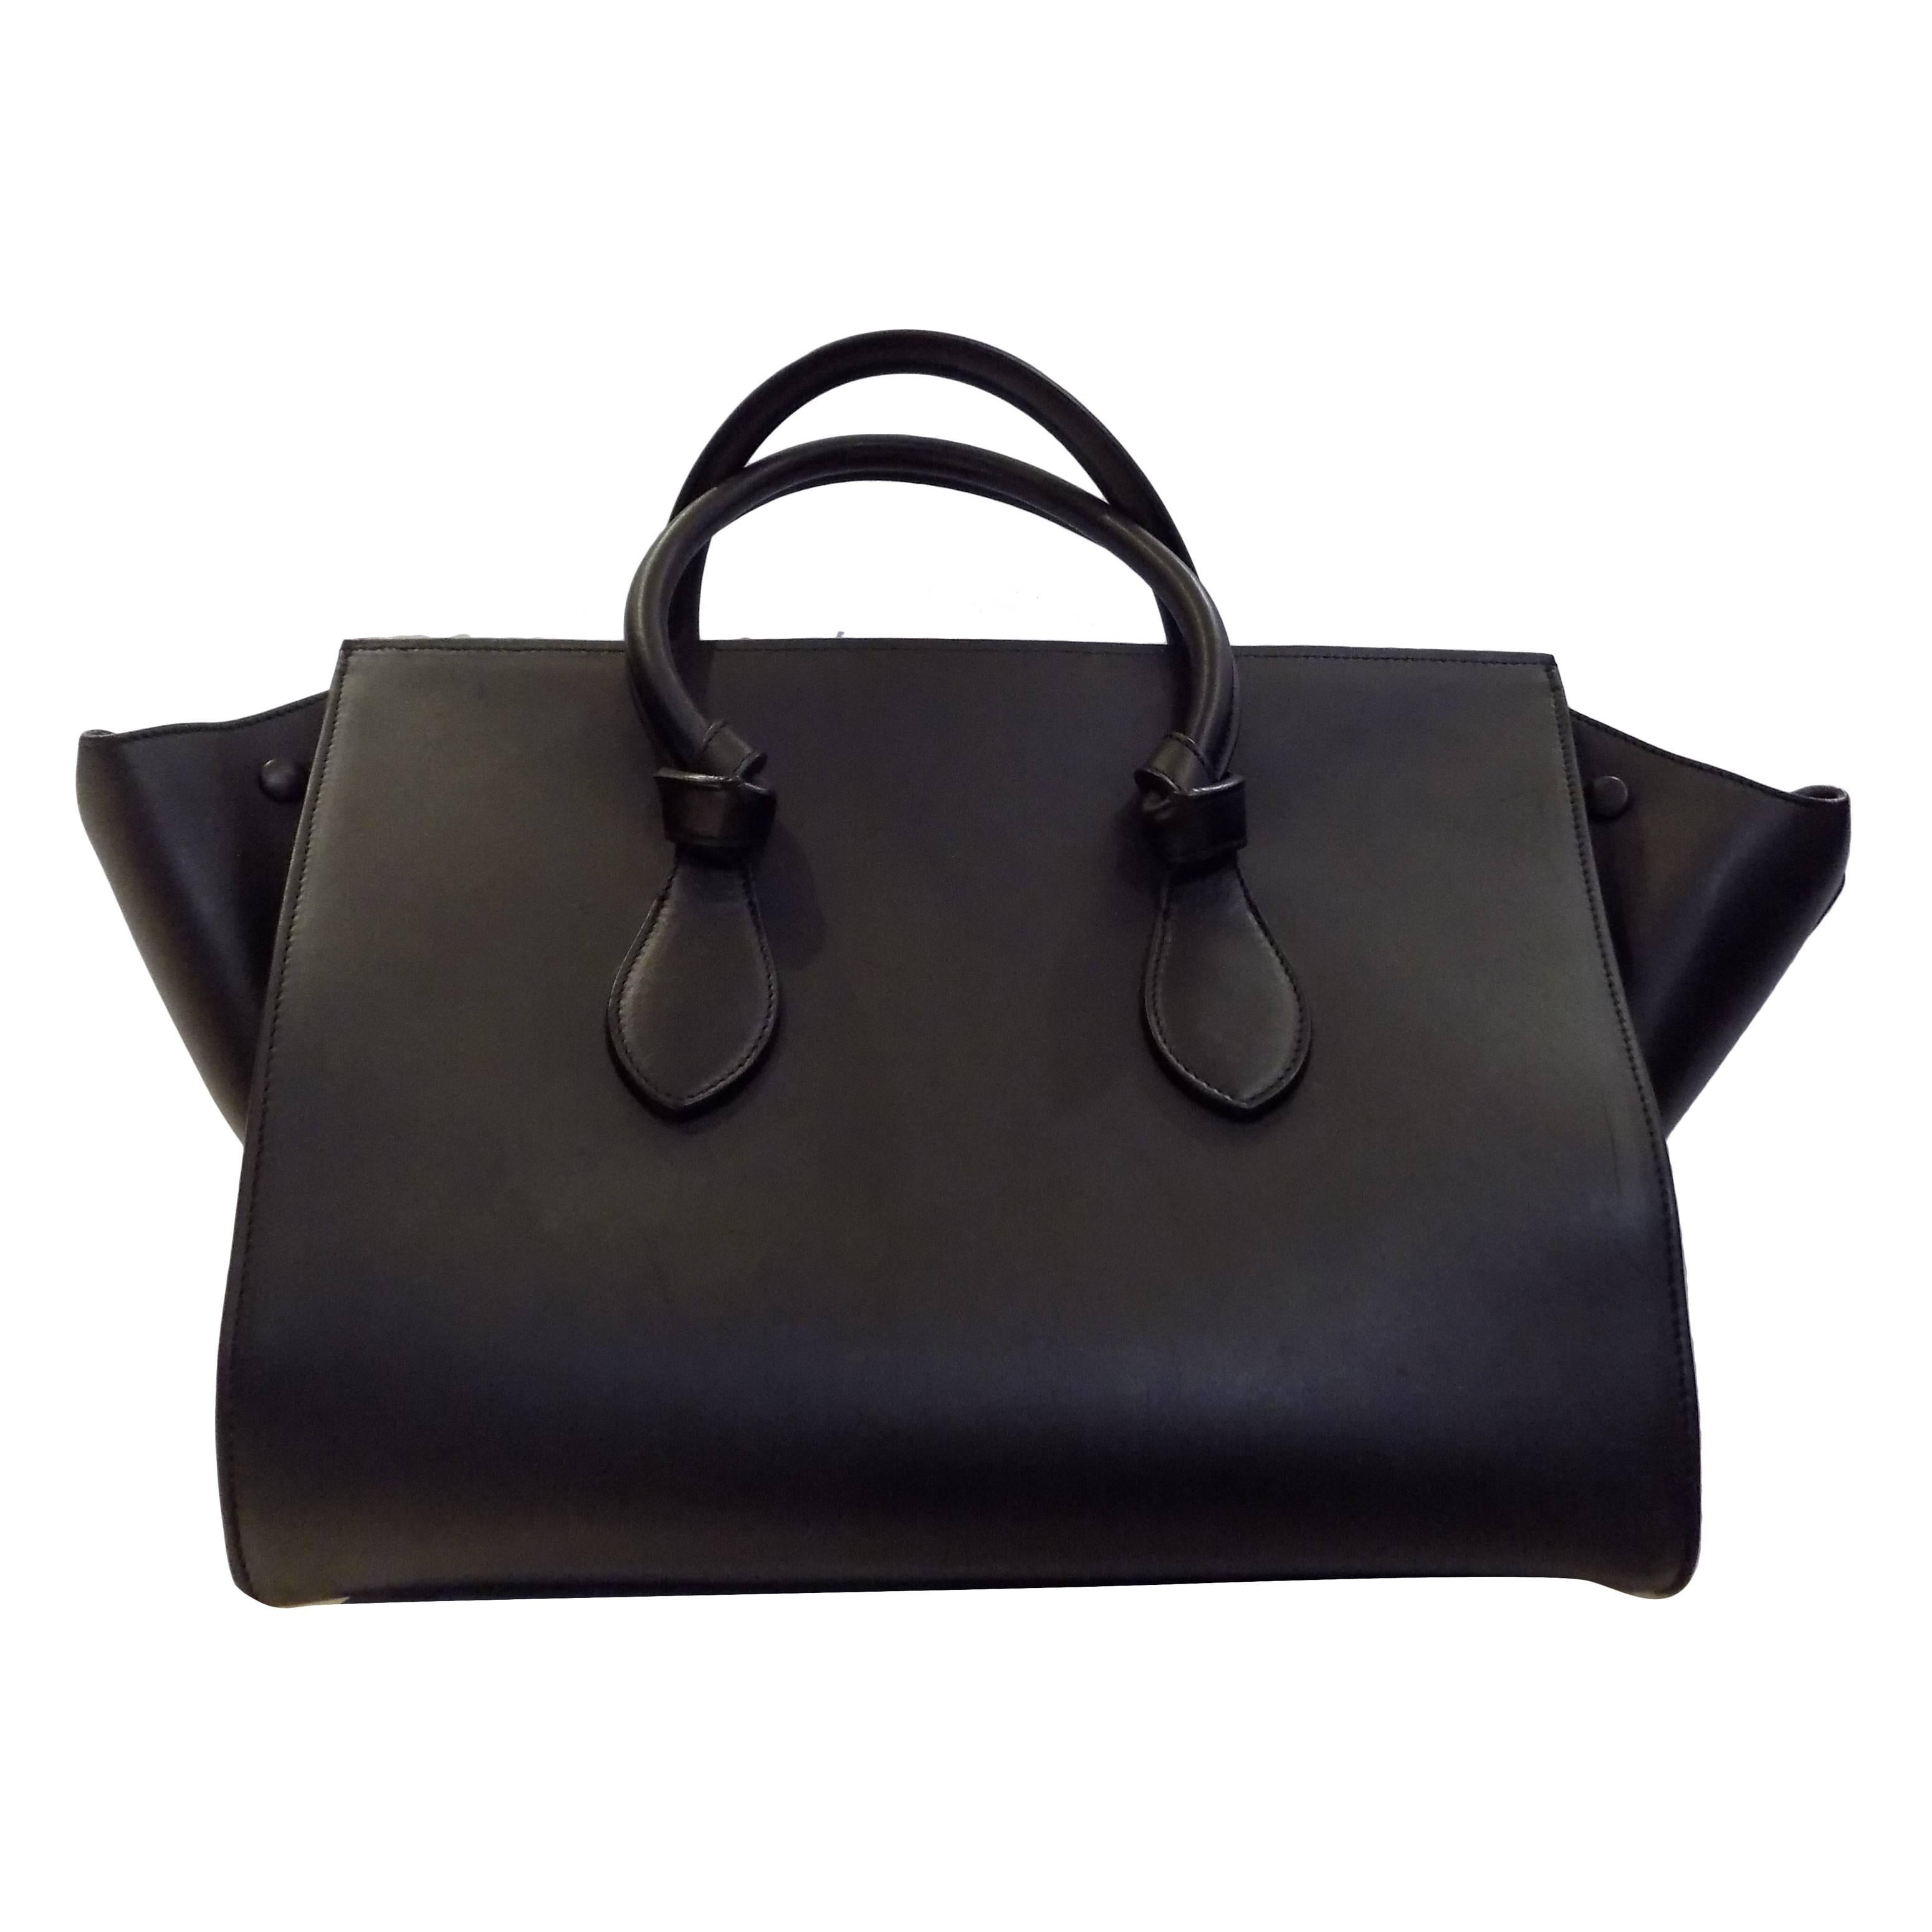 Celine Tie Black Leather Bag